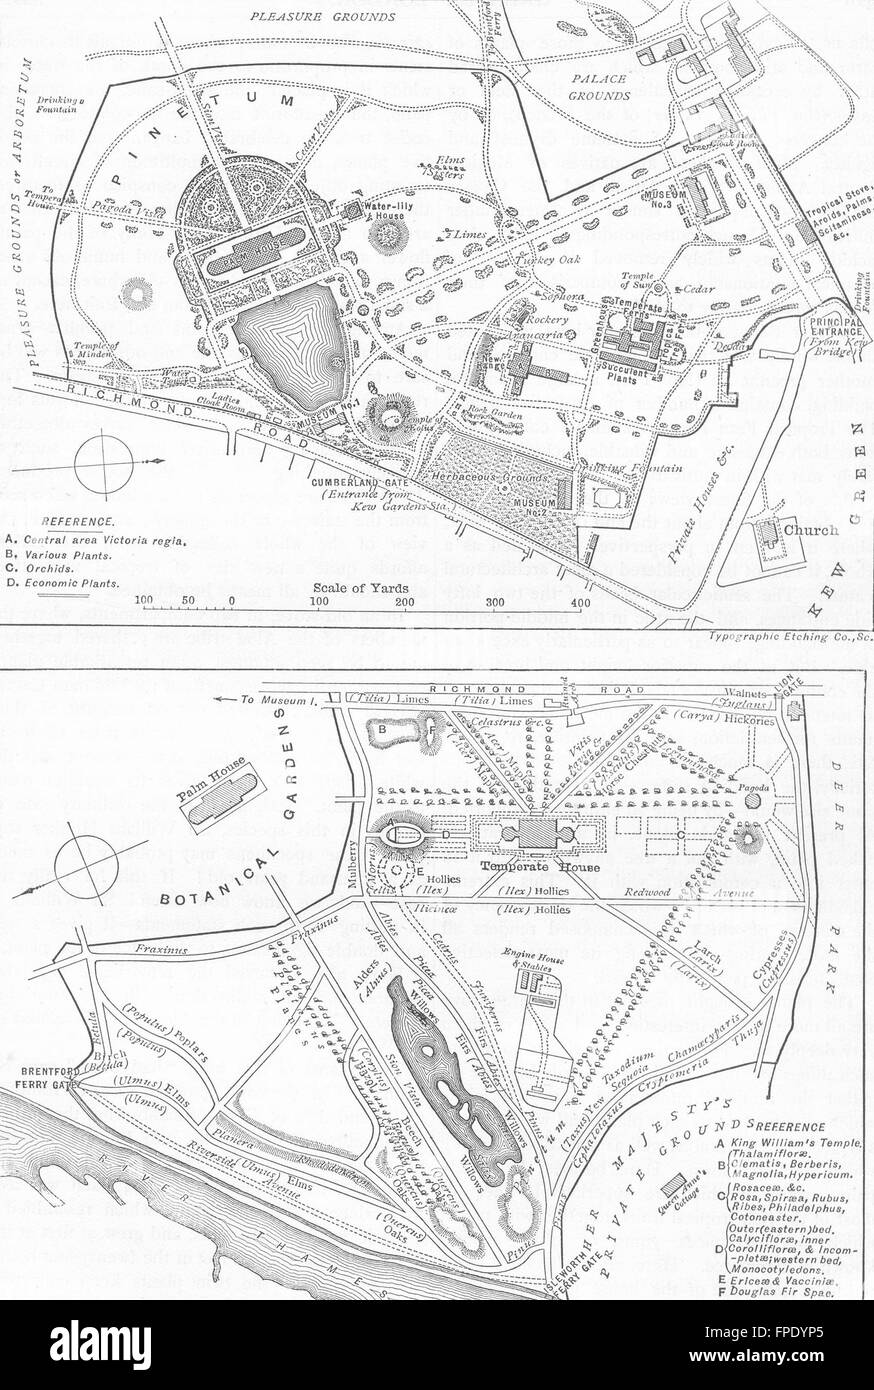 Kew Gardens Map and Access – Royal Botanic Gardens, Kew